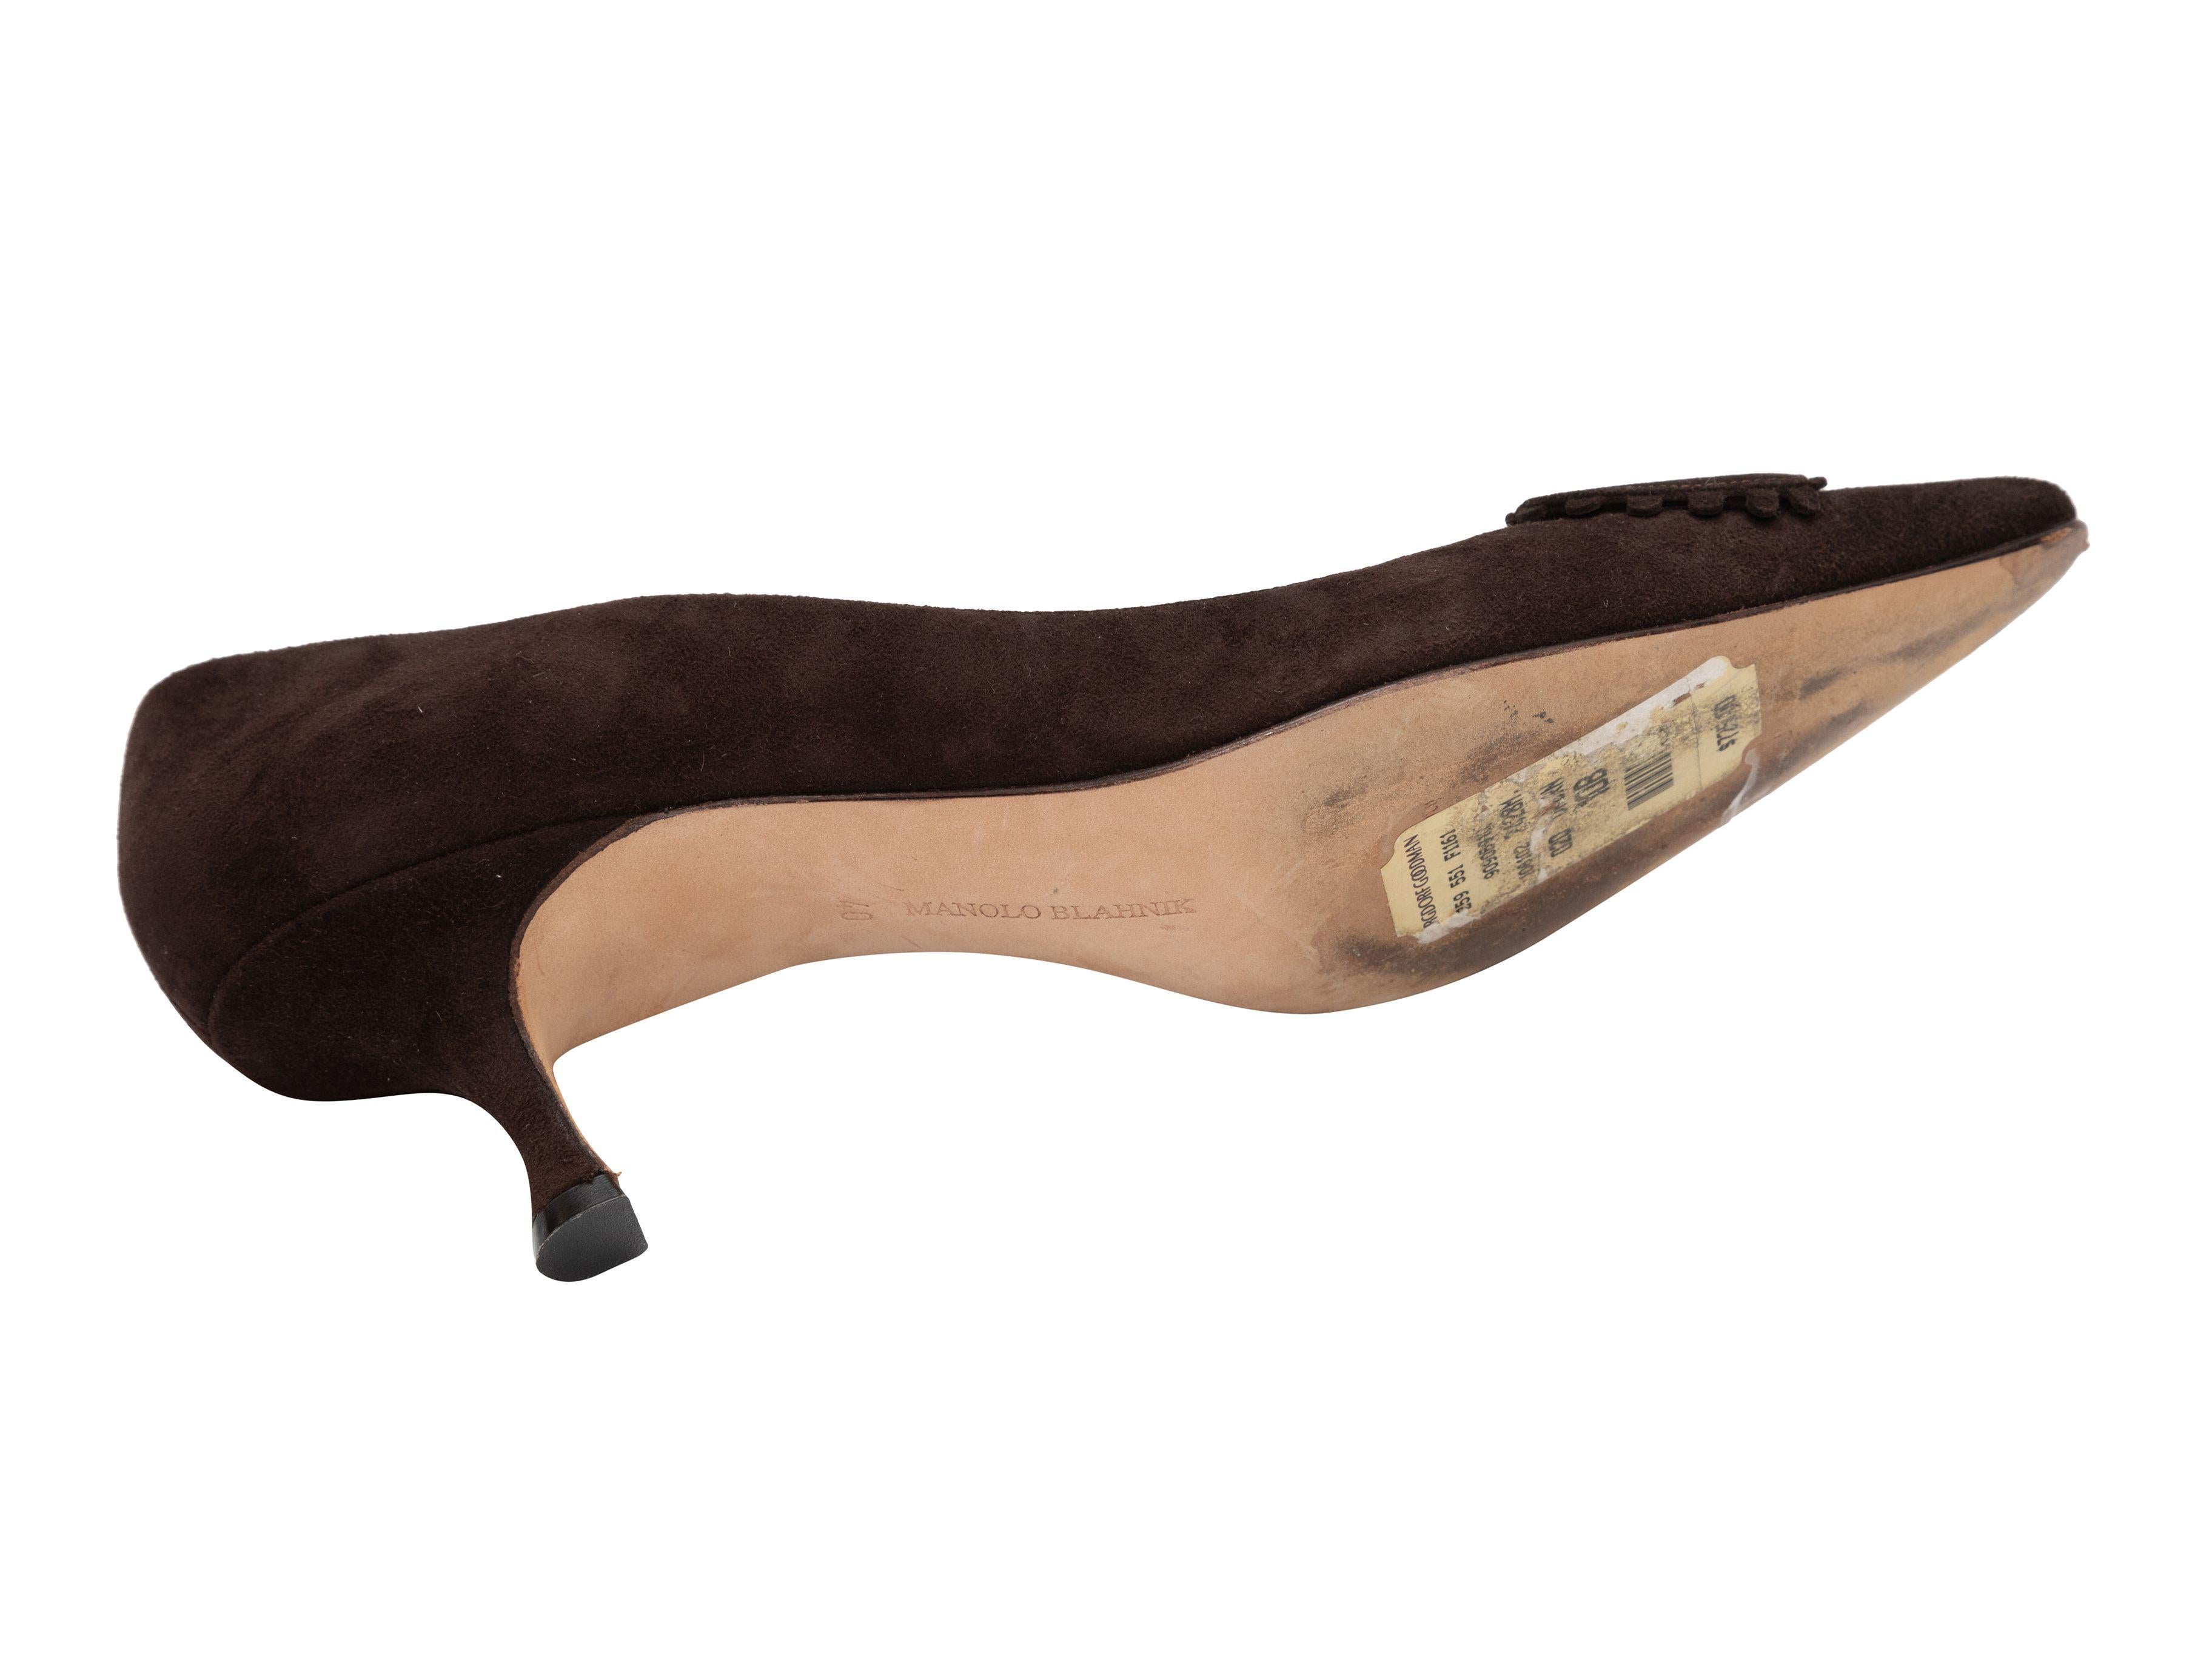 Product Details: Brown suede pointed-toe pumps by Manolo Blahnik. Kitten heels. 2.5